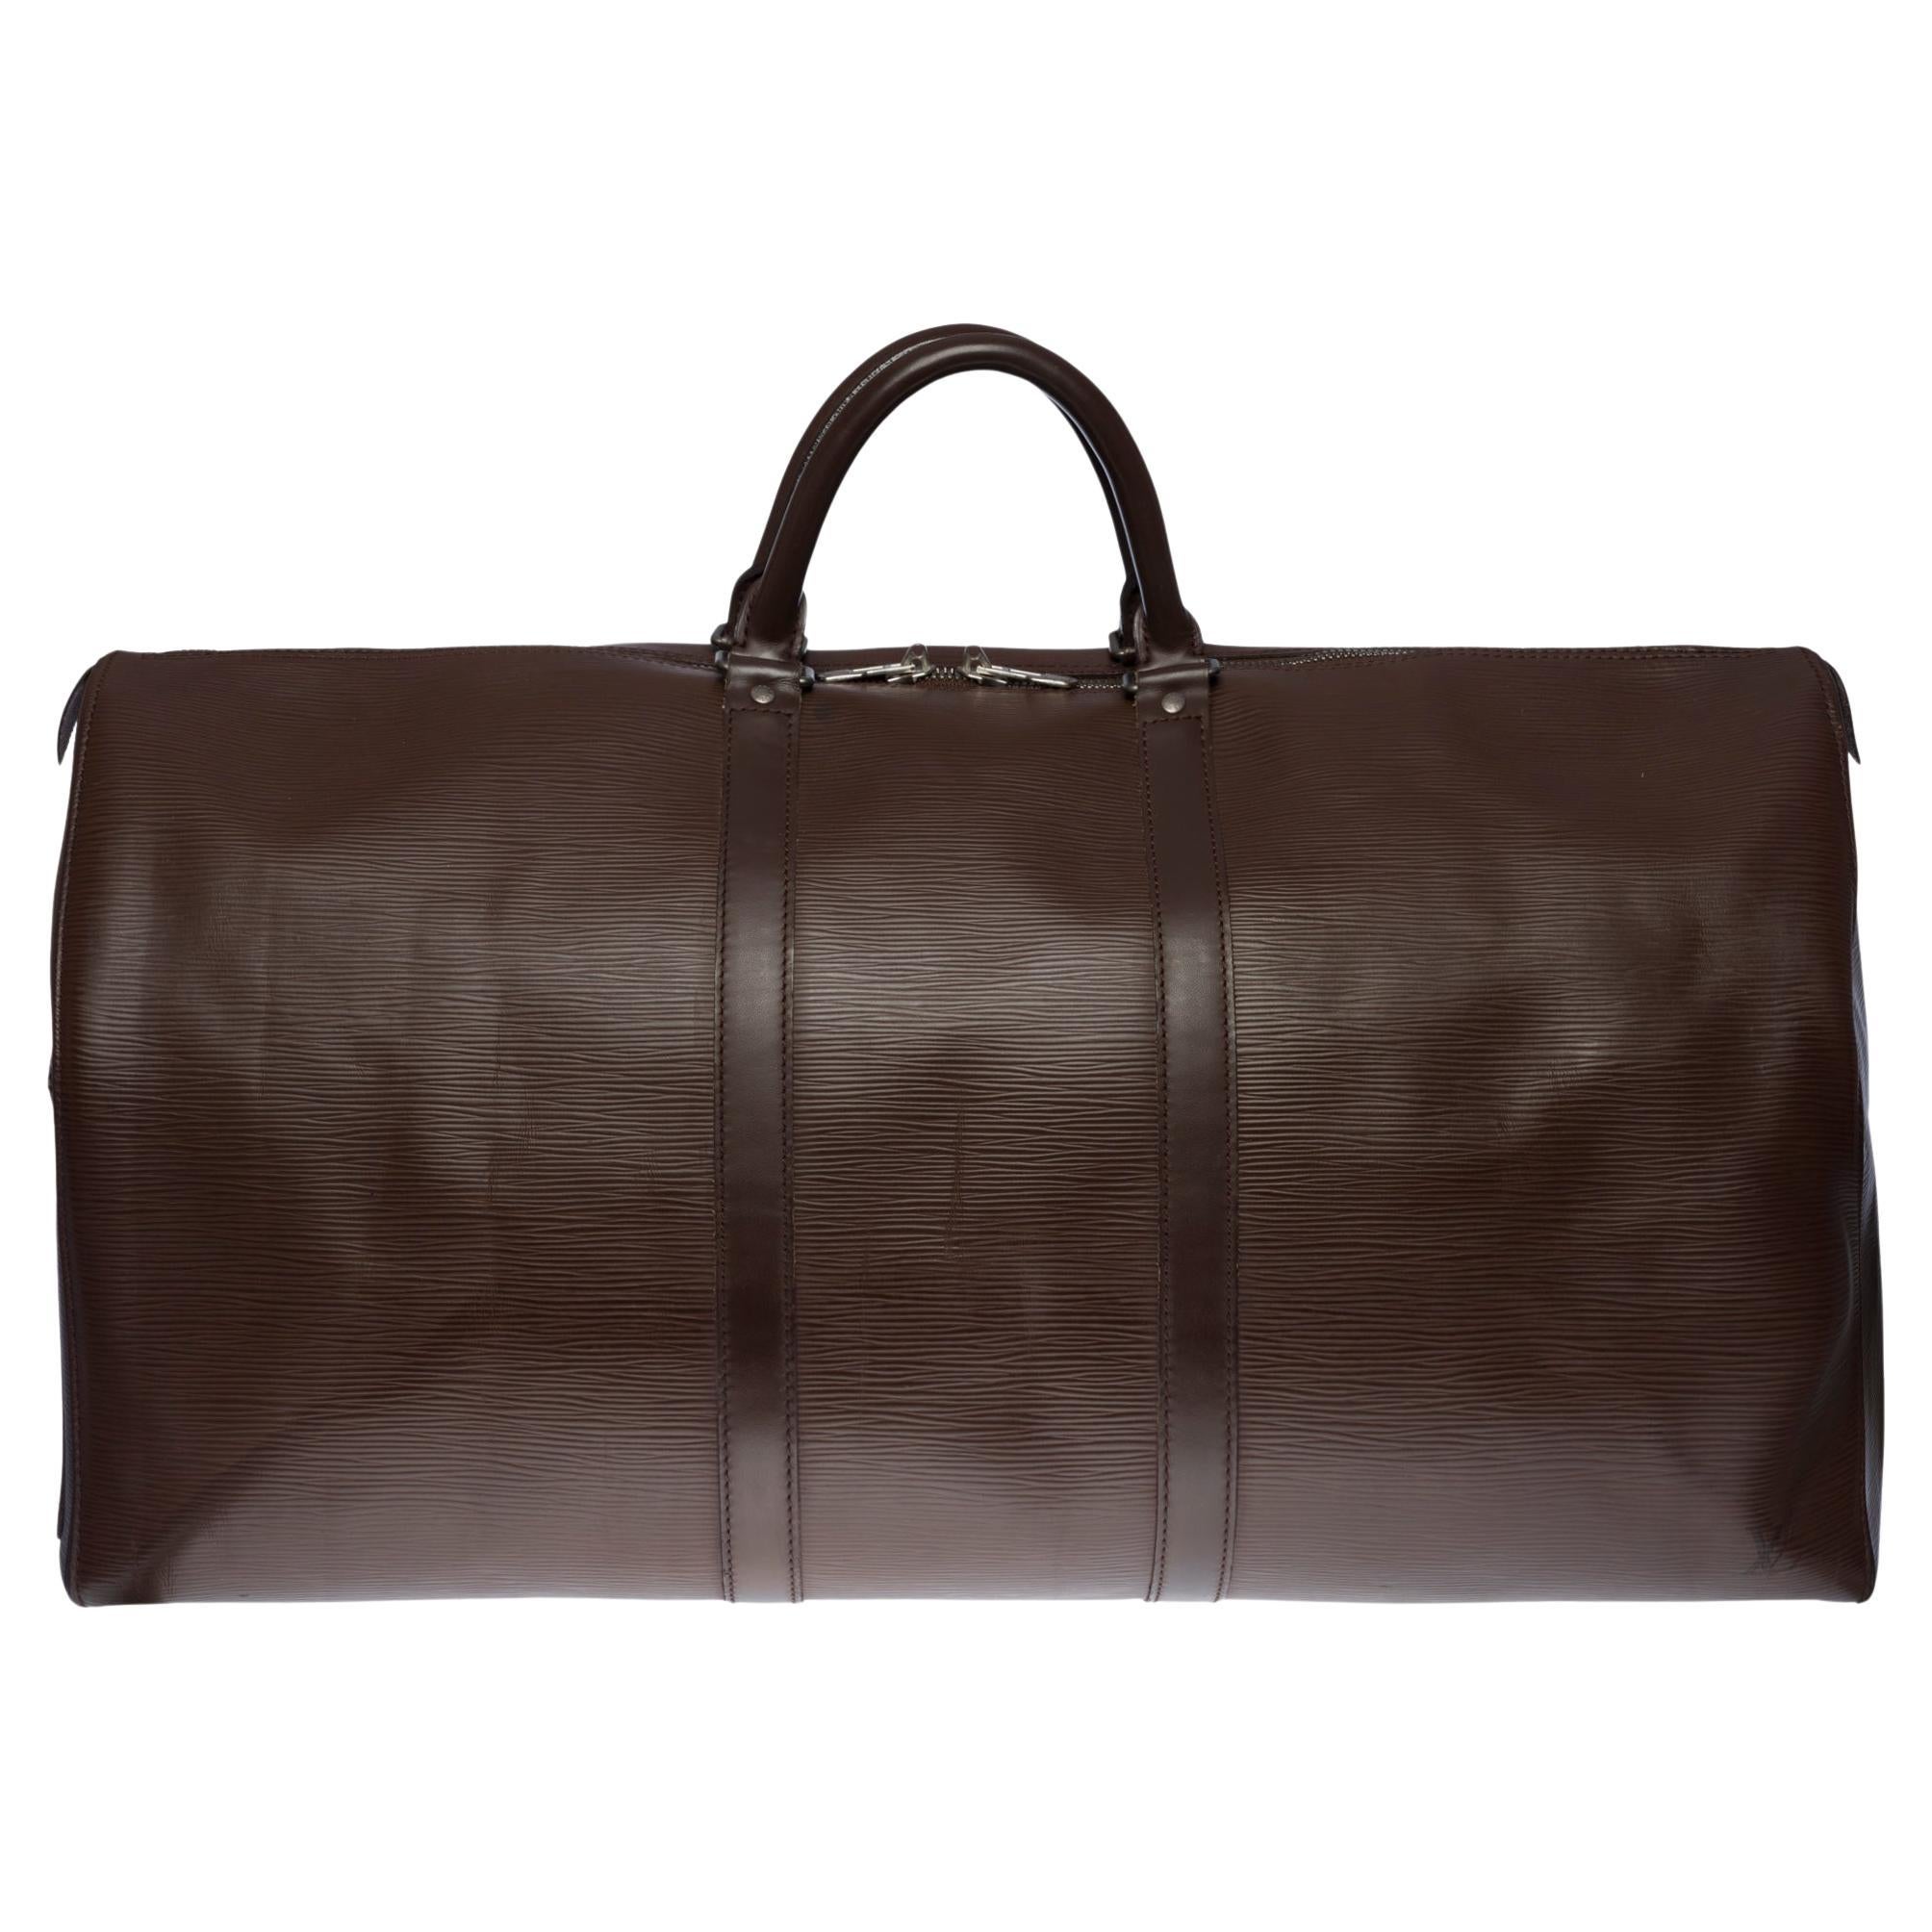 Louis Vuitton Keepall 55 Travel bag in Brown épi leather, matte SHW